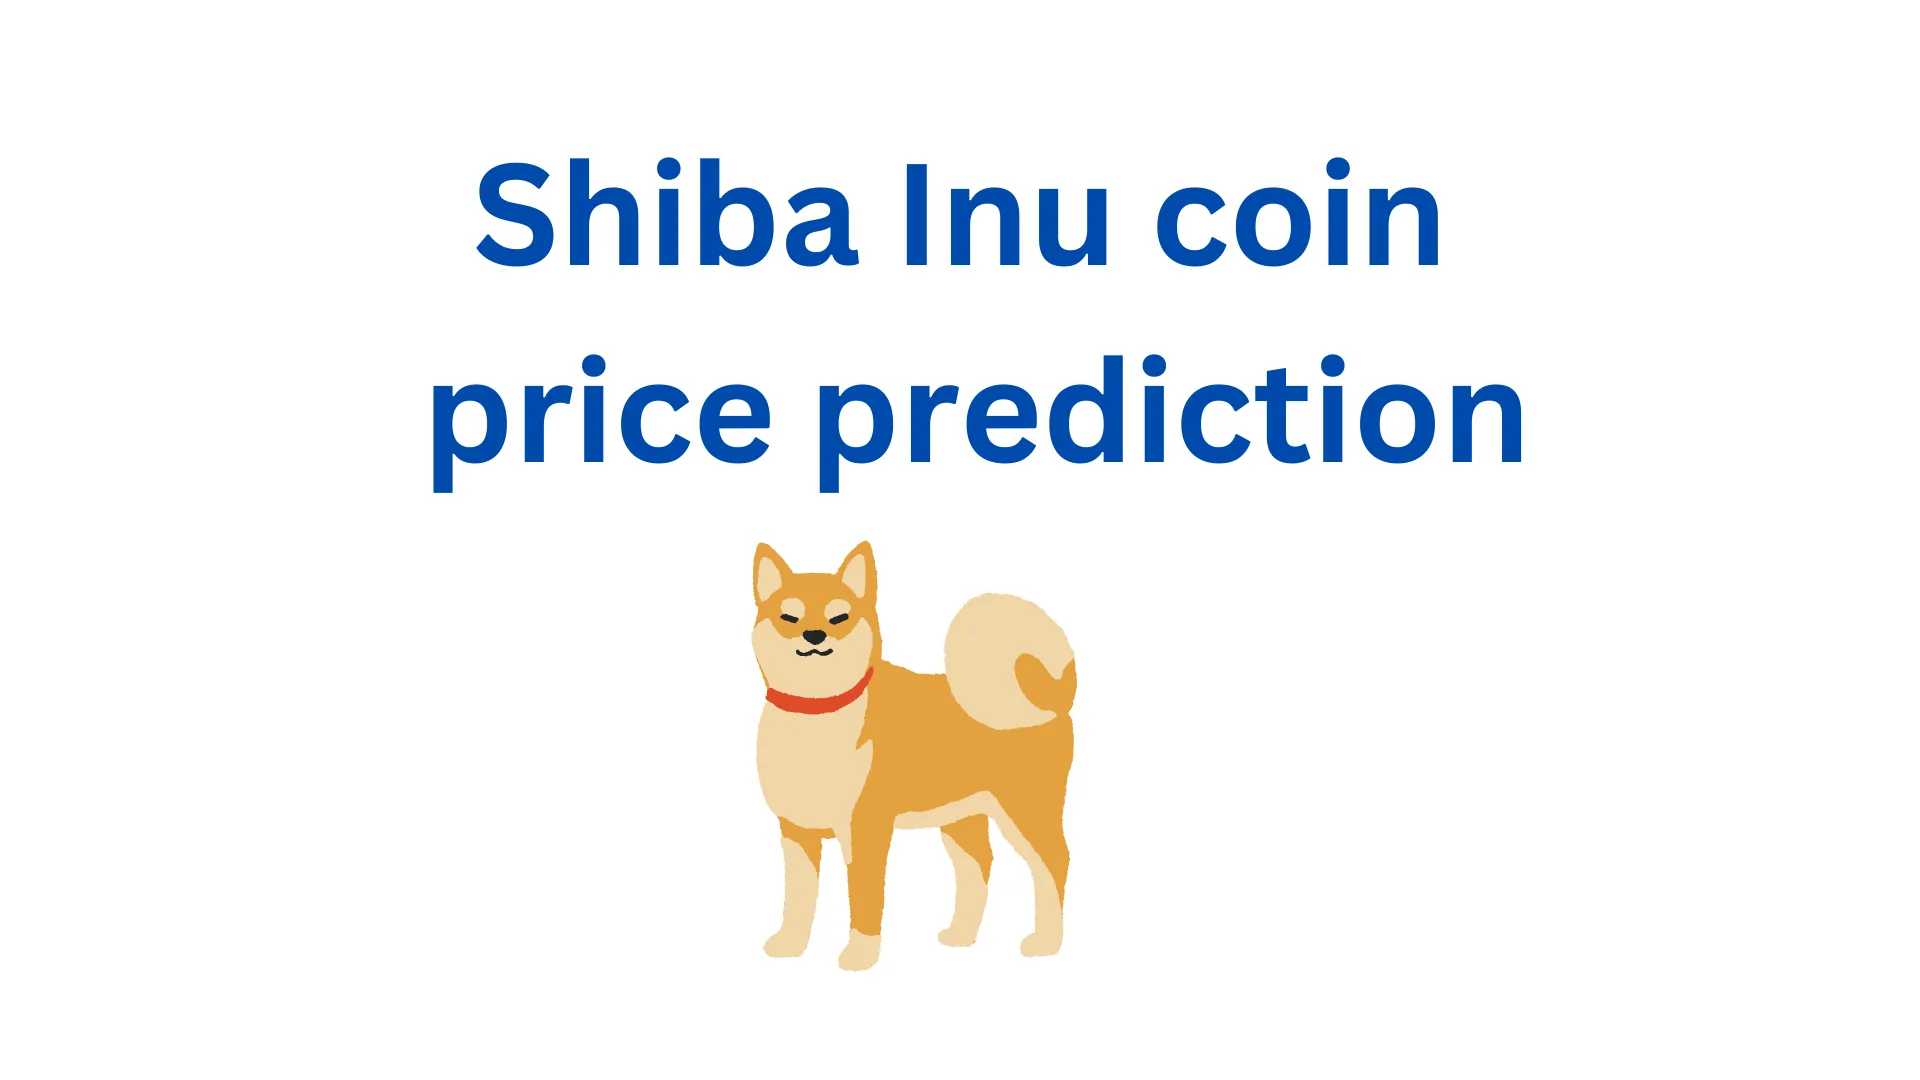 Shiba Inu coin price prediction